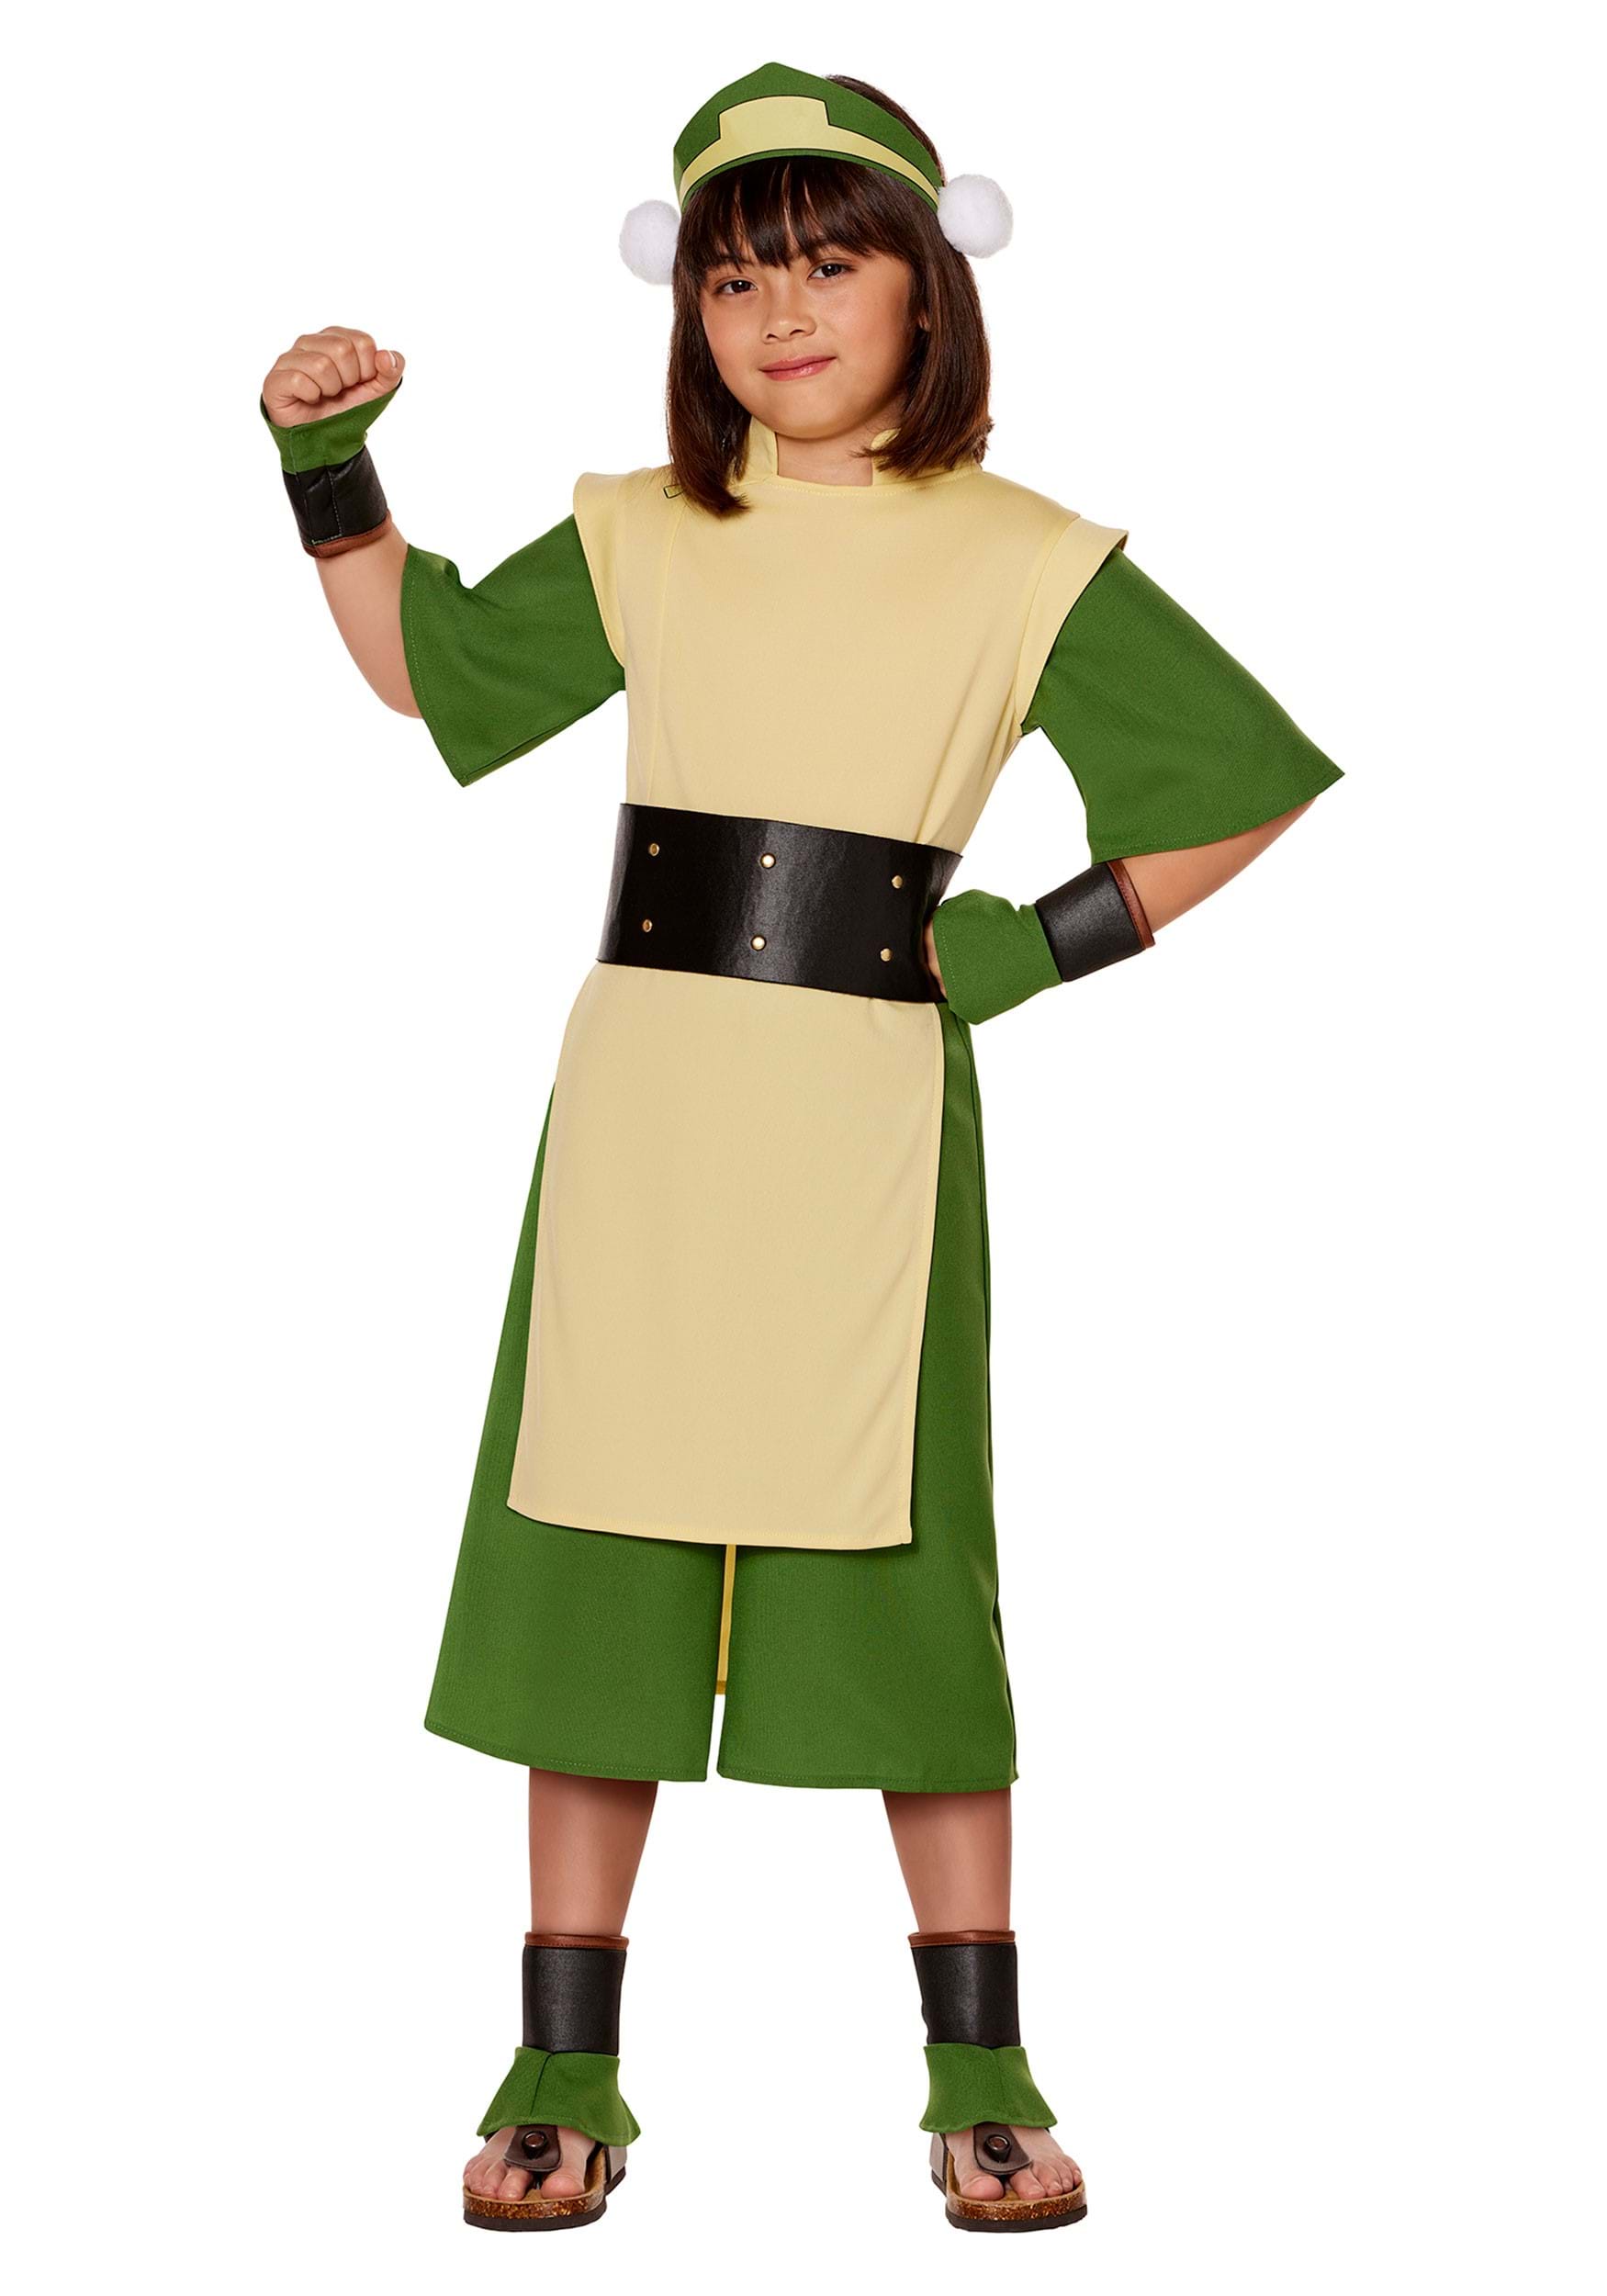 Avatar The Last Airbender Child Toph Costume , Nickelodeon Costumes